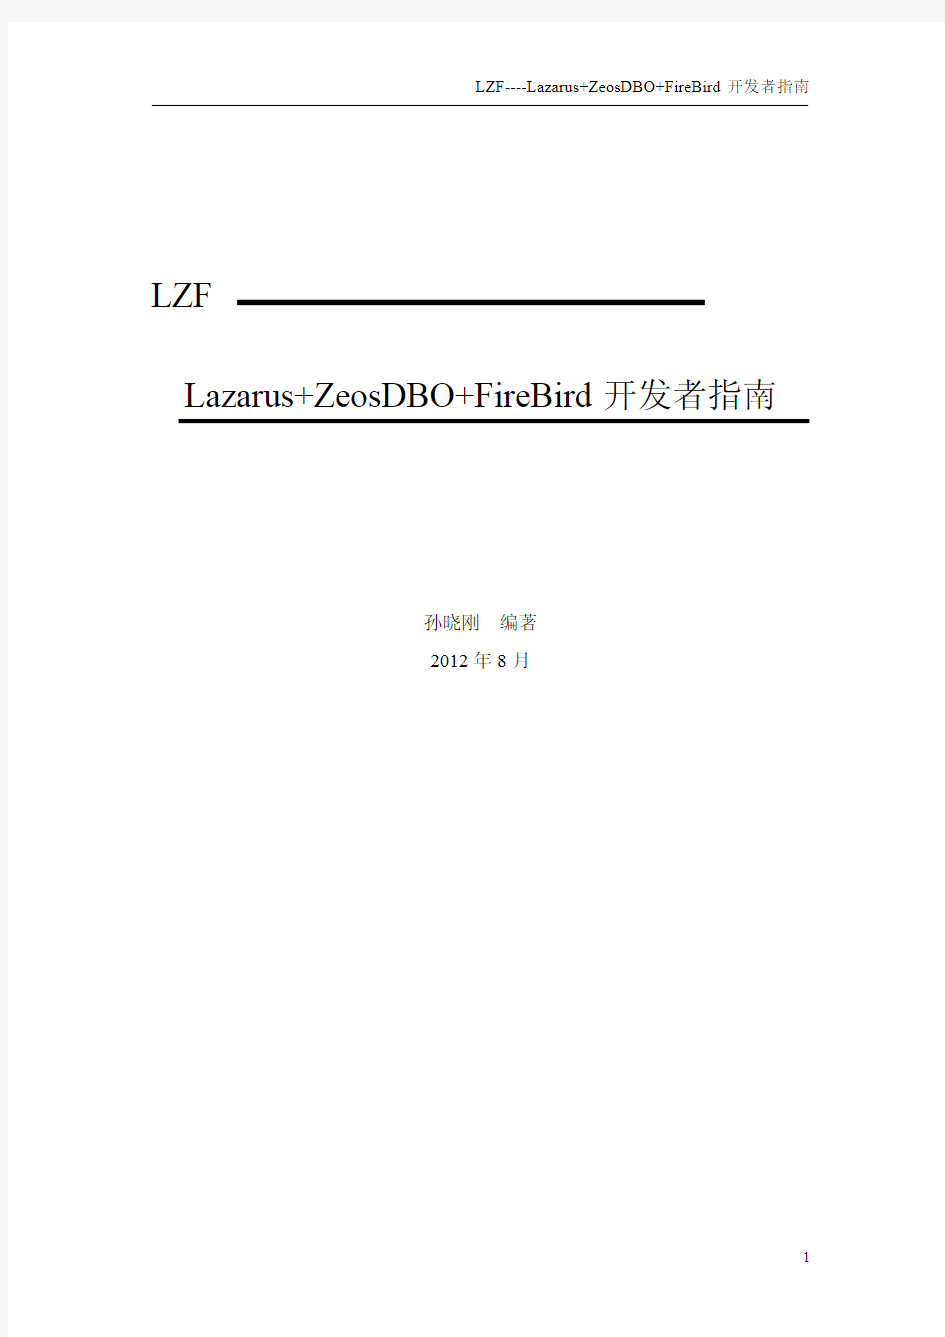 Lazarus+ZeosDBO+FireBird开发者指南